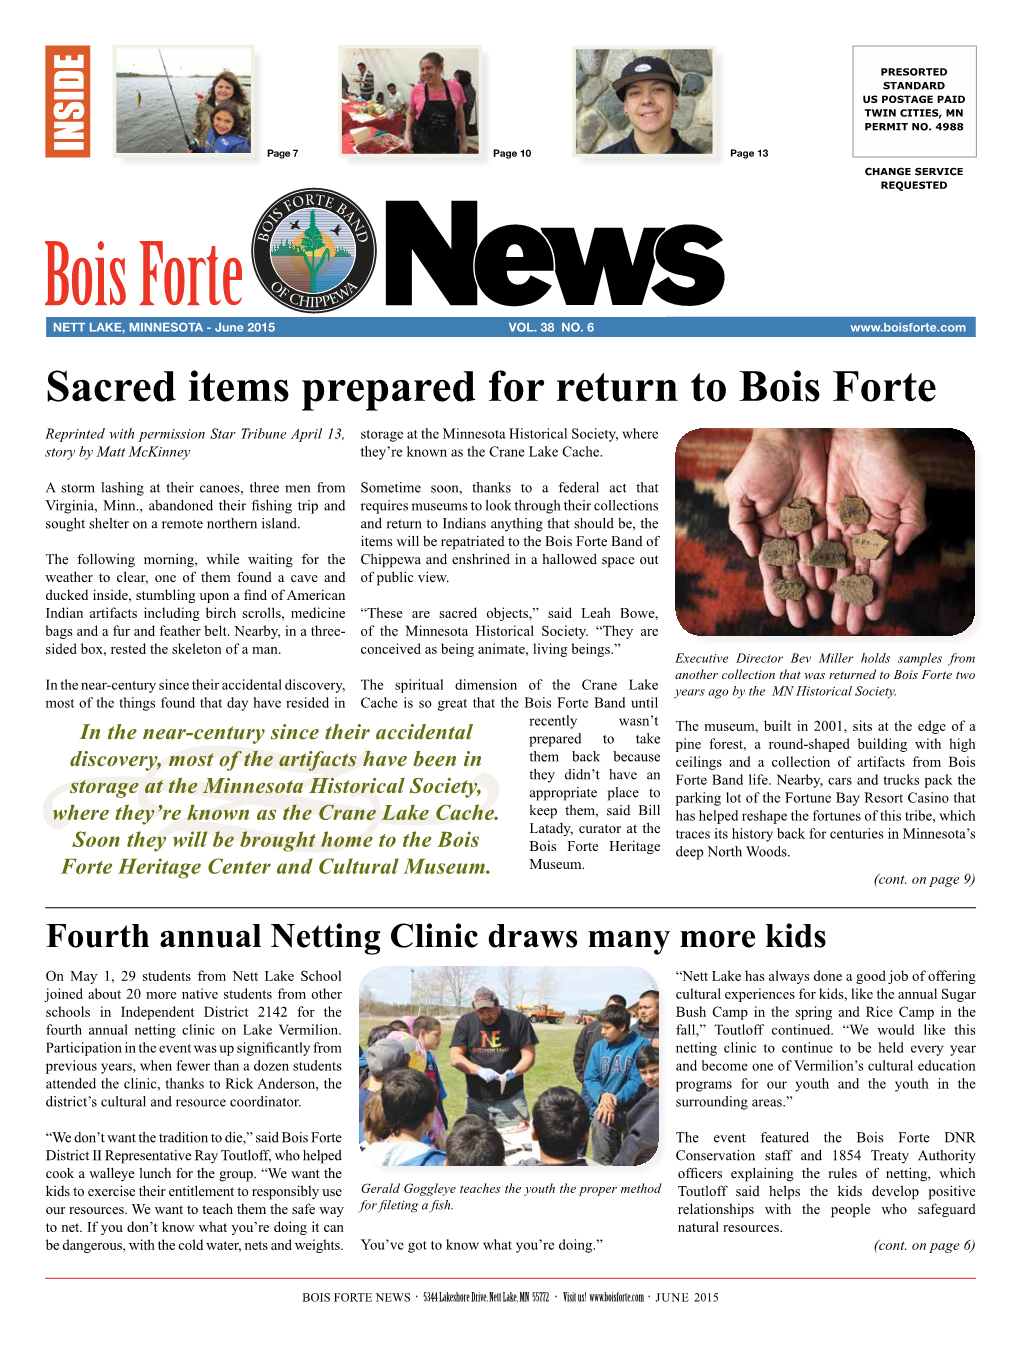 Sacred Items Prepared for Return to Bois Forte